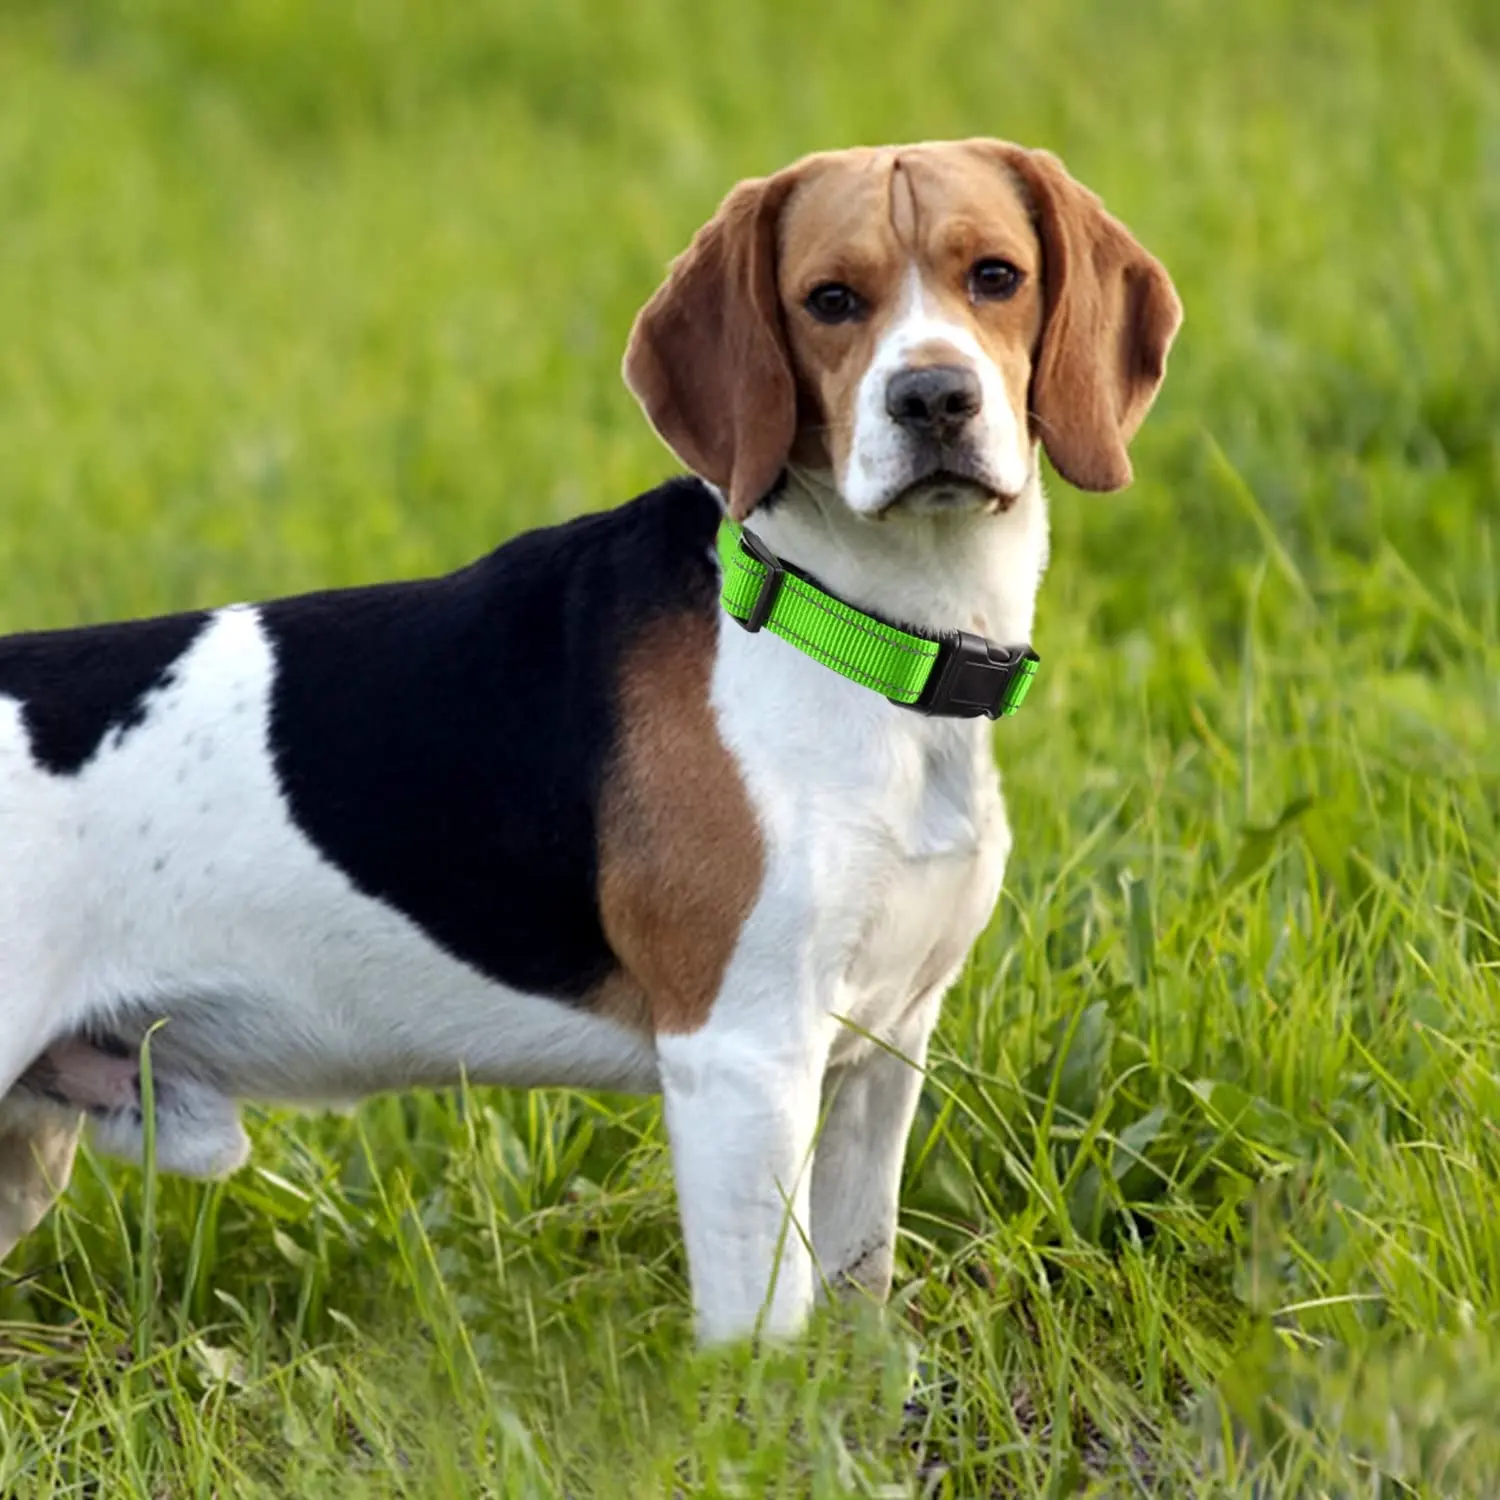 उच्च गुणवत्ता वाले निर्माता समायोज्य कुत्ते प्रशिक्षण कॉलर कस्टम लोगो चिंतनशील कुत्ते कॉलर